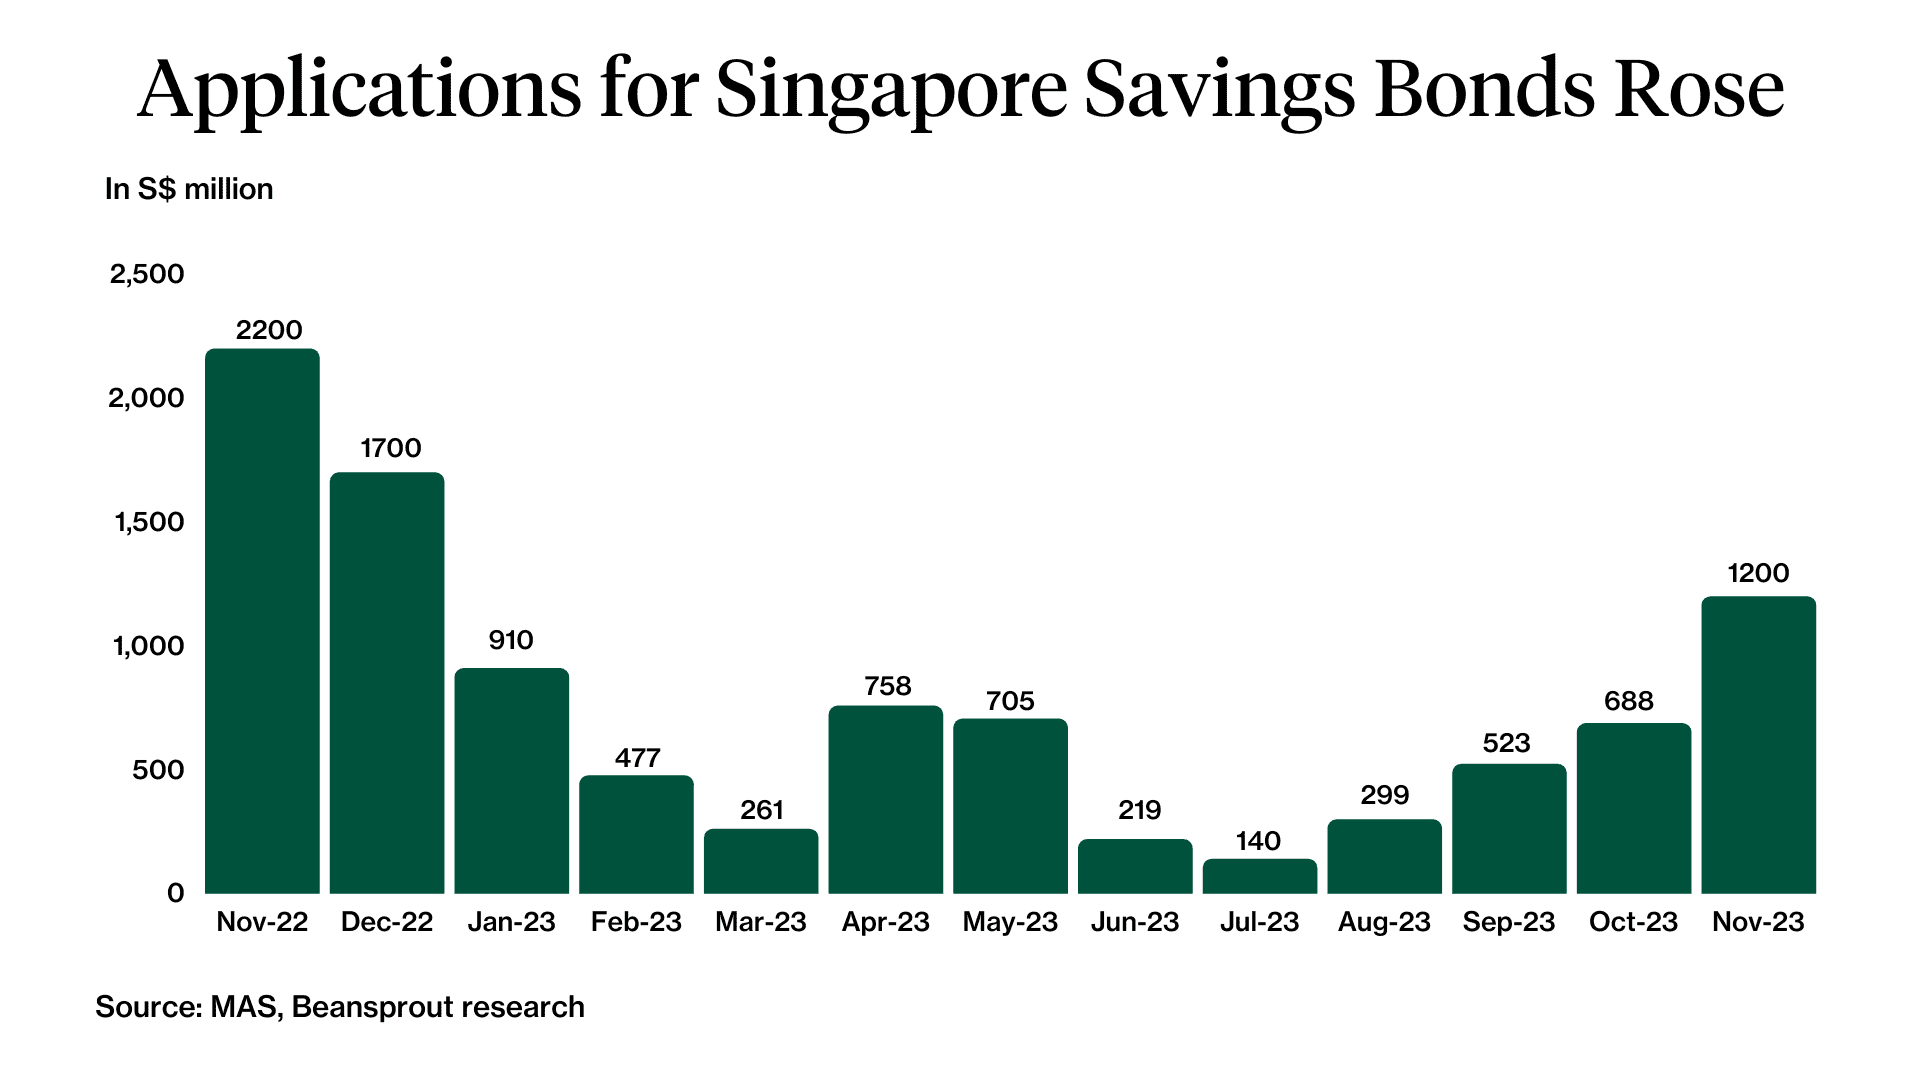 ssb singapore savings bond applications oct 2023